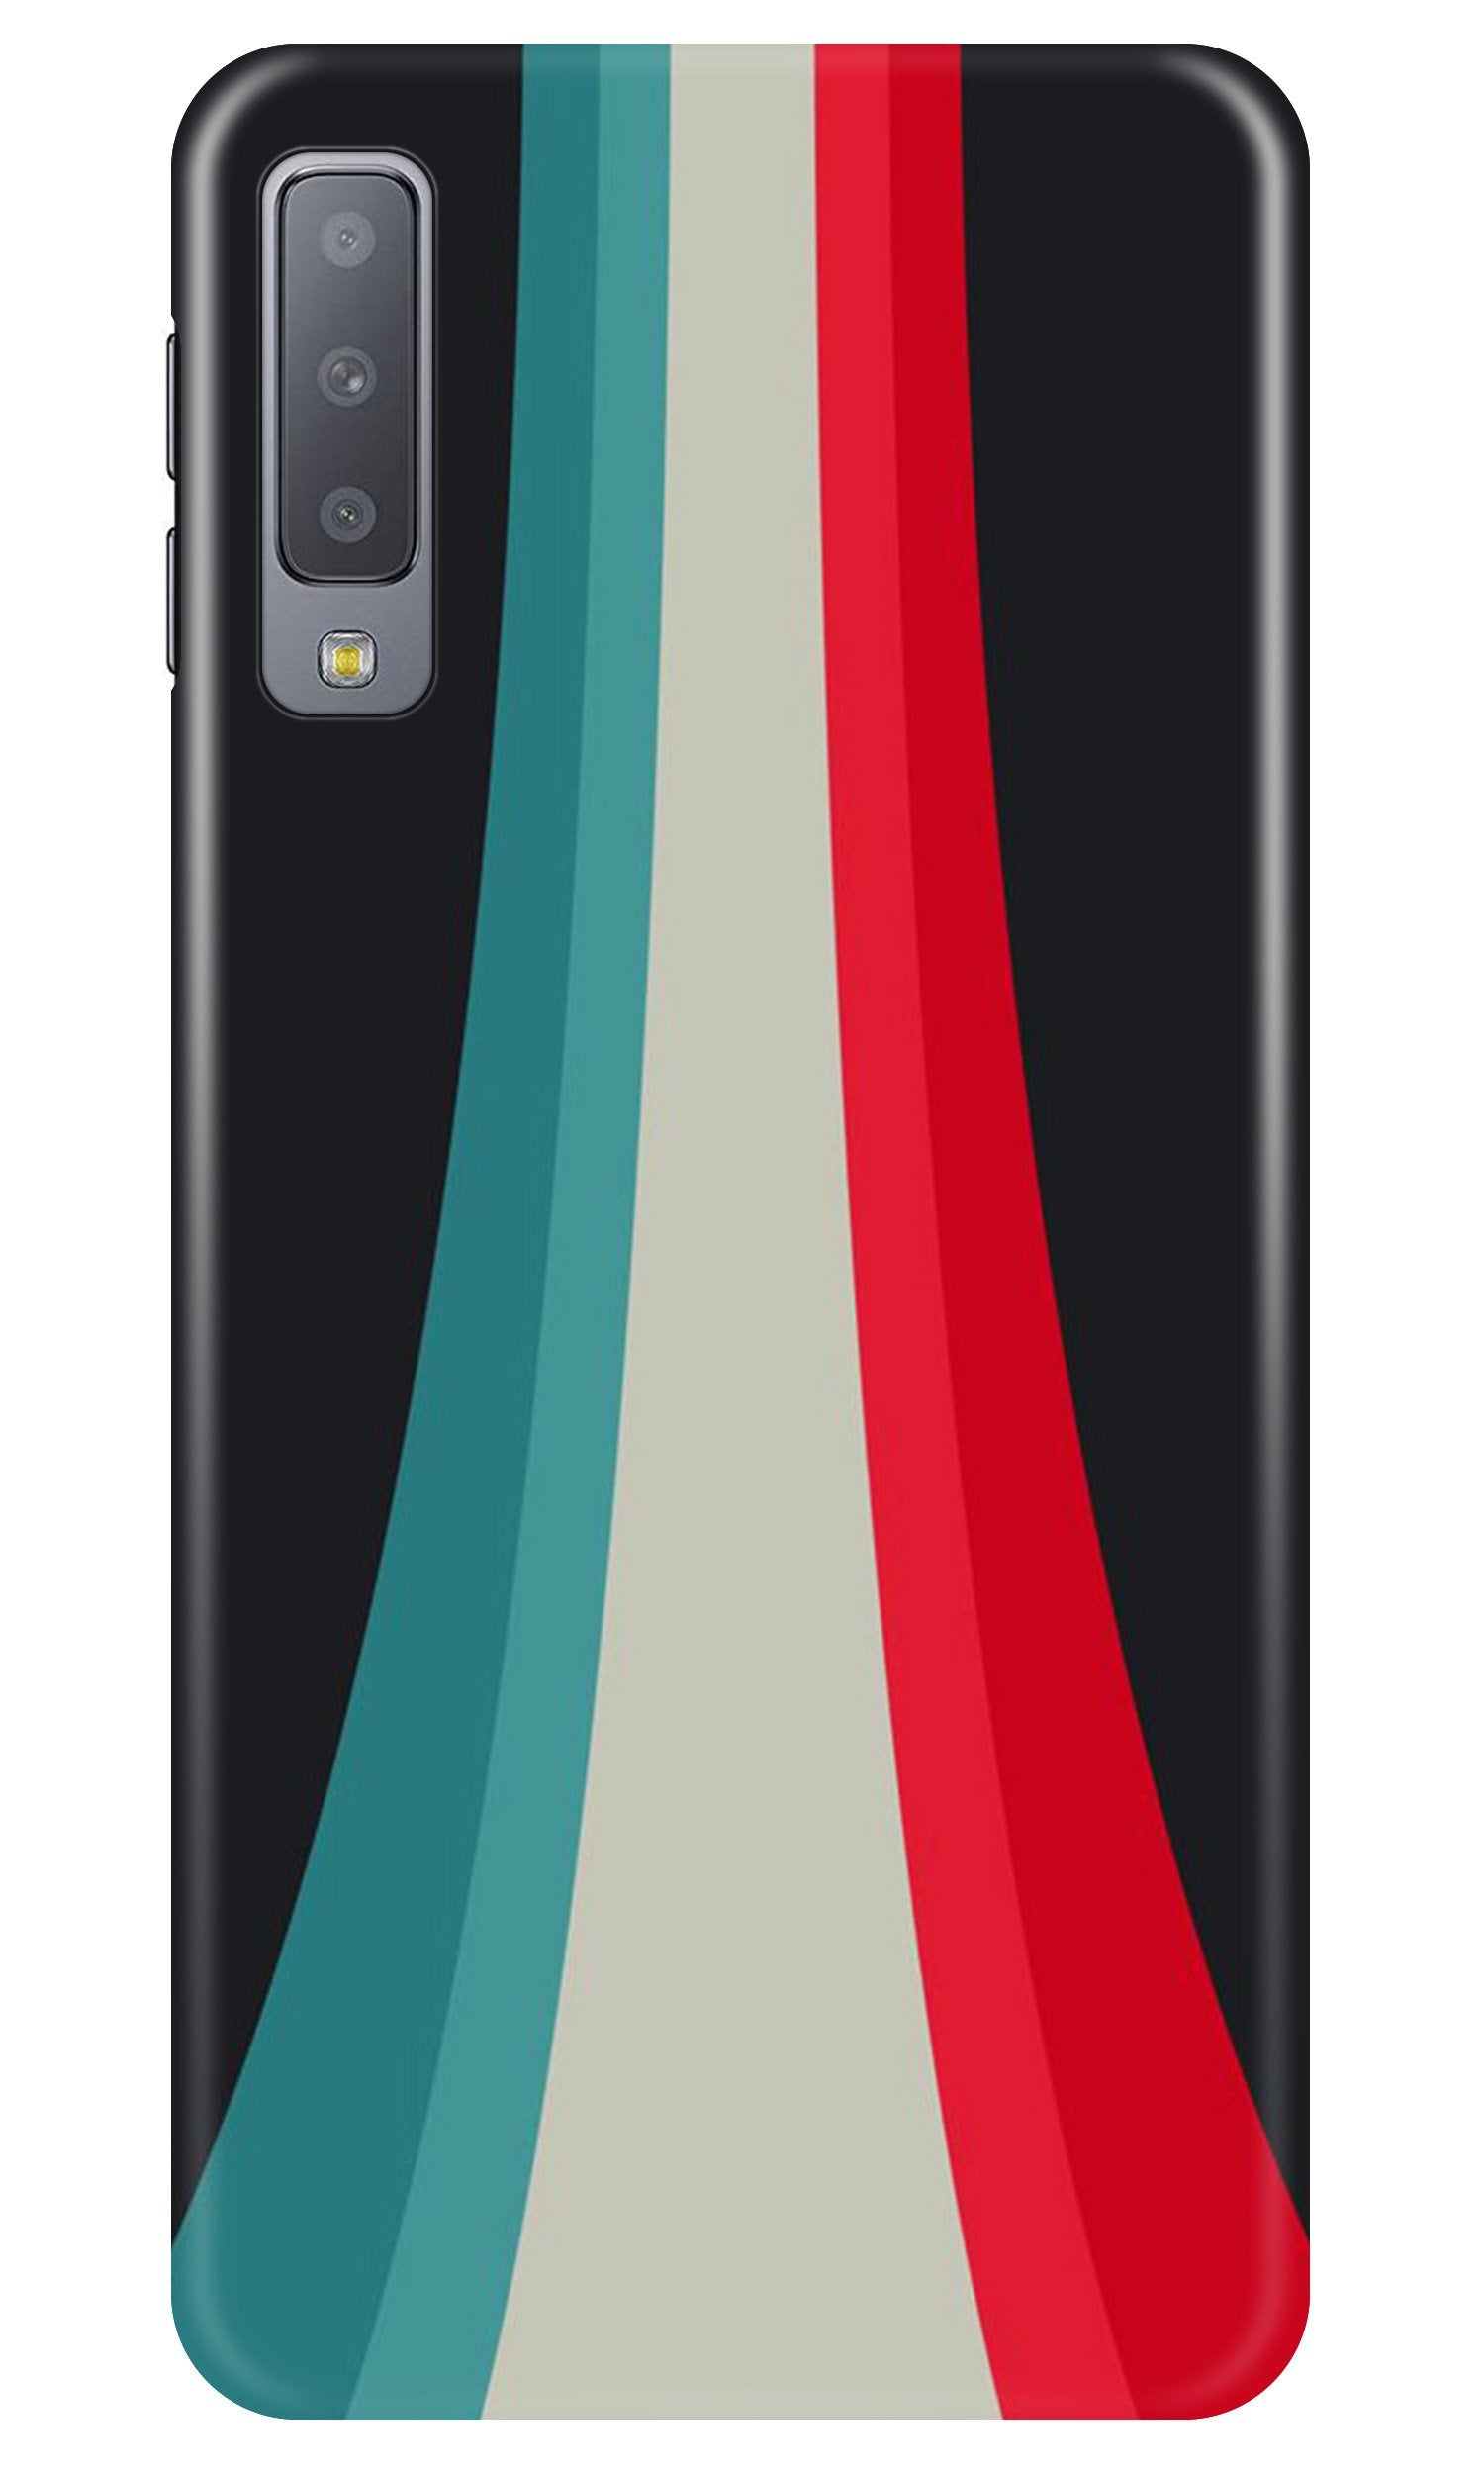 Slider Case for Samung Galaxy A70s (Design - 189)